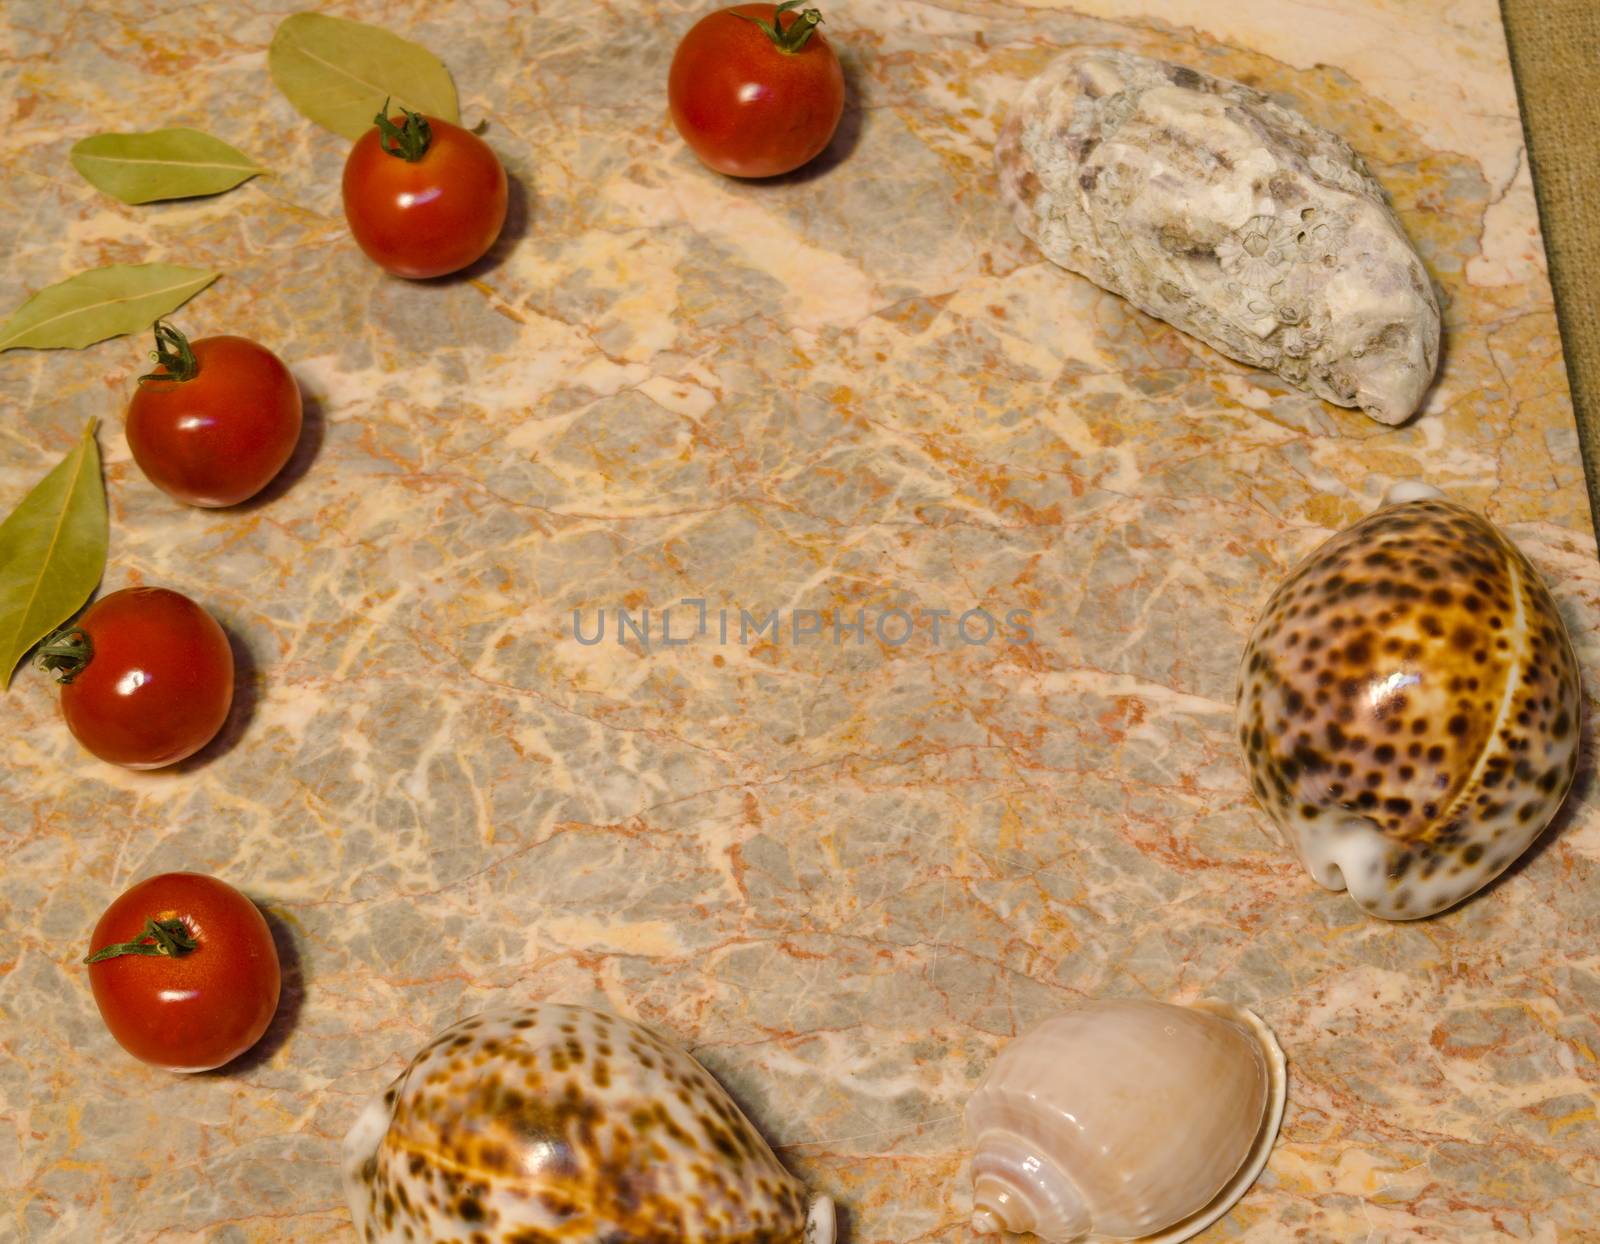 presentation surface - vegetables, seashells, egg on marble surface: cherry tomatoes, bay leaves, oyster, seashells, chicken egg